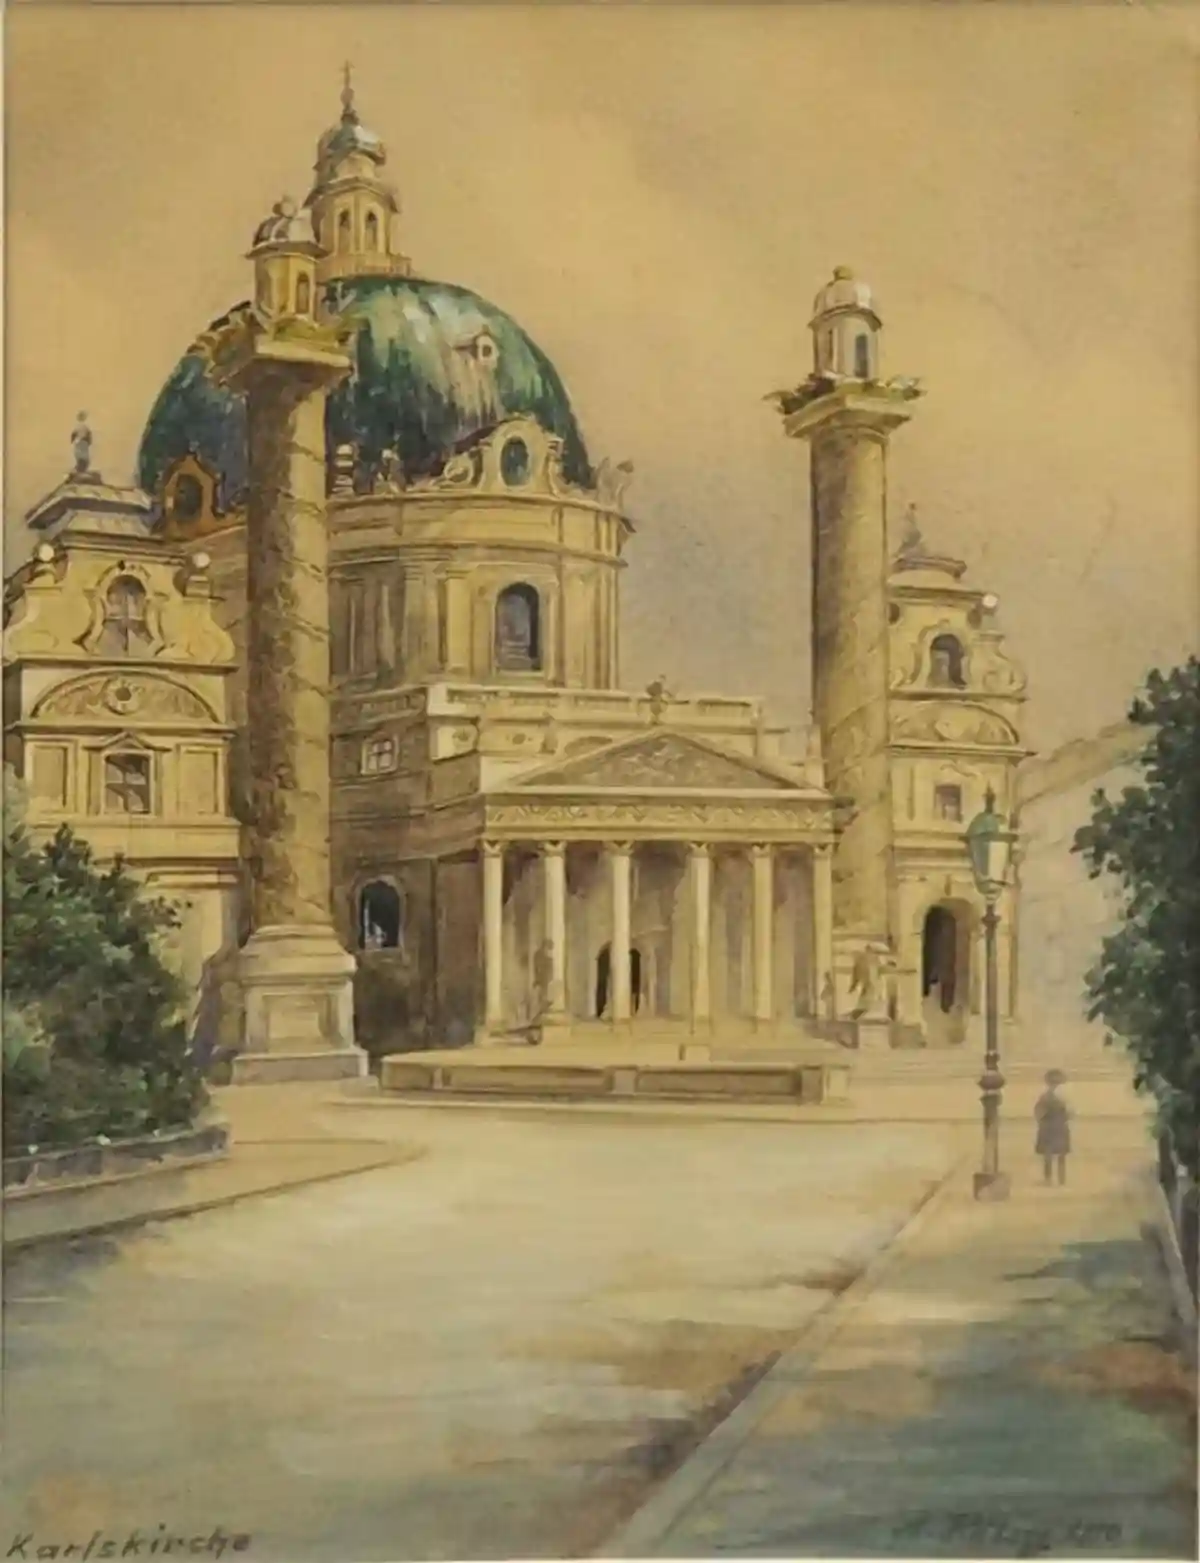 Картина Гитлера на аукционе, изображена церковь Карлскирхе в Вене. Фото: www.auktionshausweidler.de